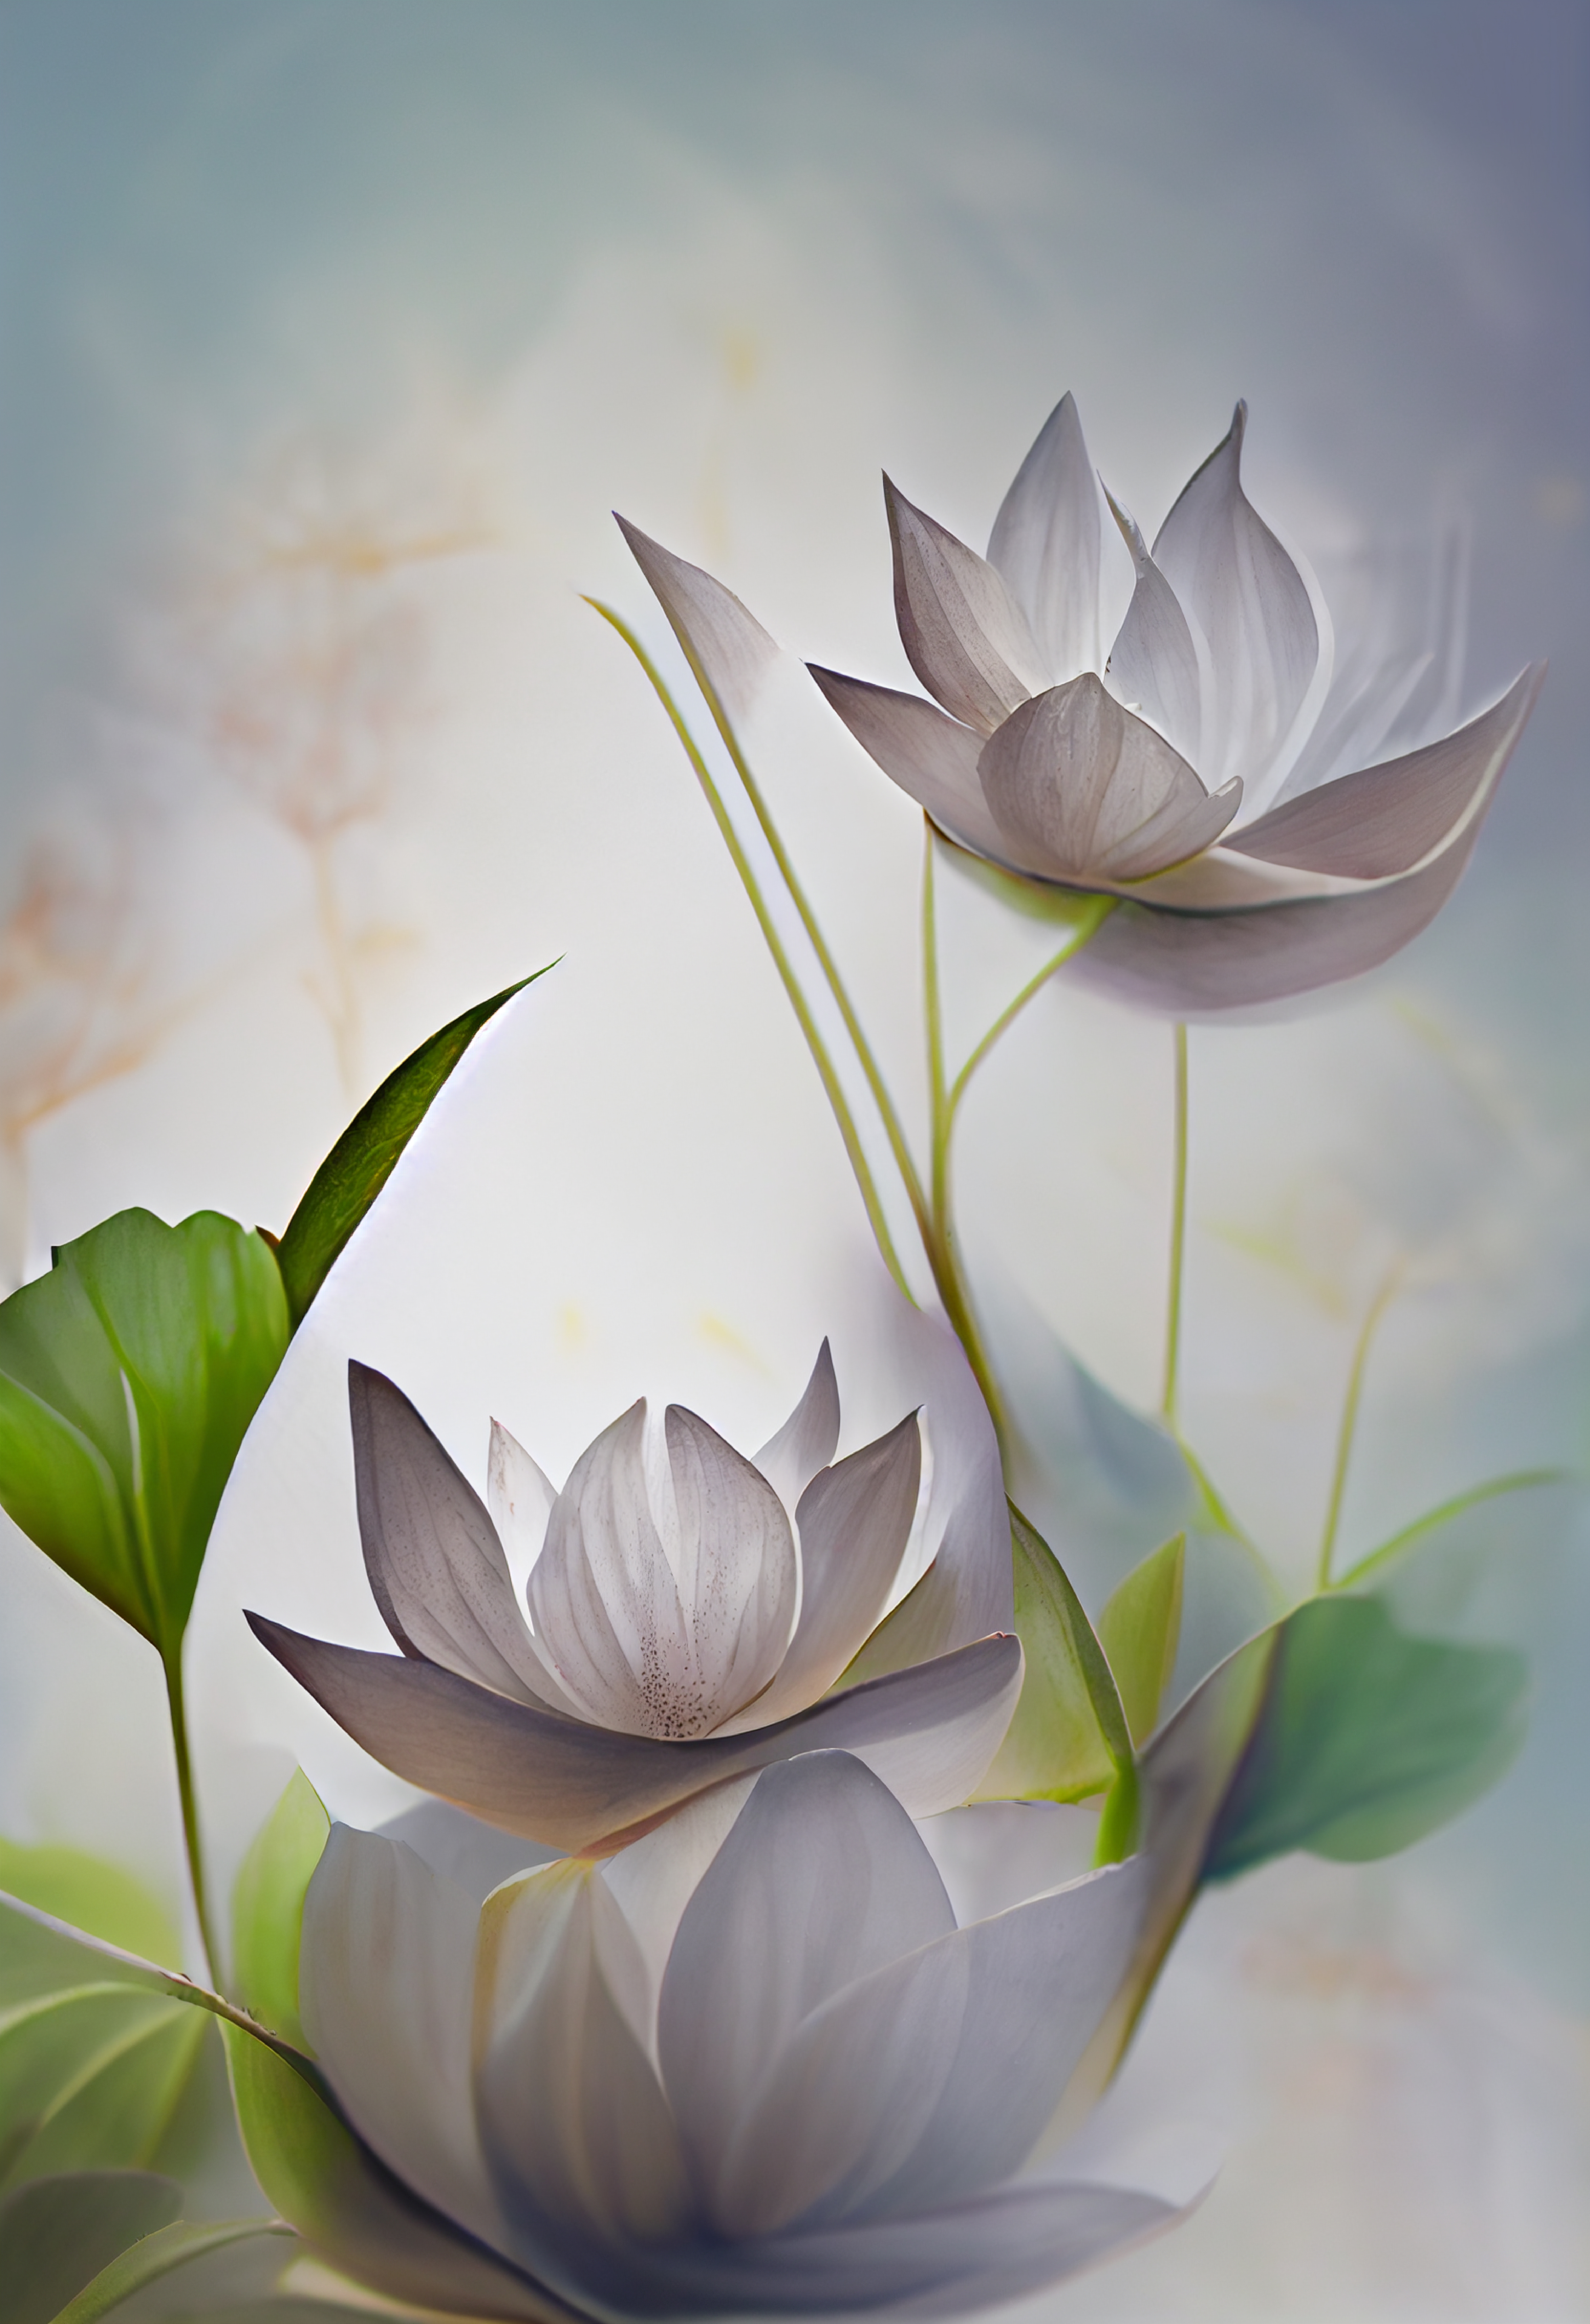 Watercolor Lotus Flower T-shirt Design Vector Download